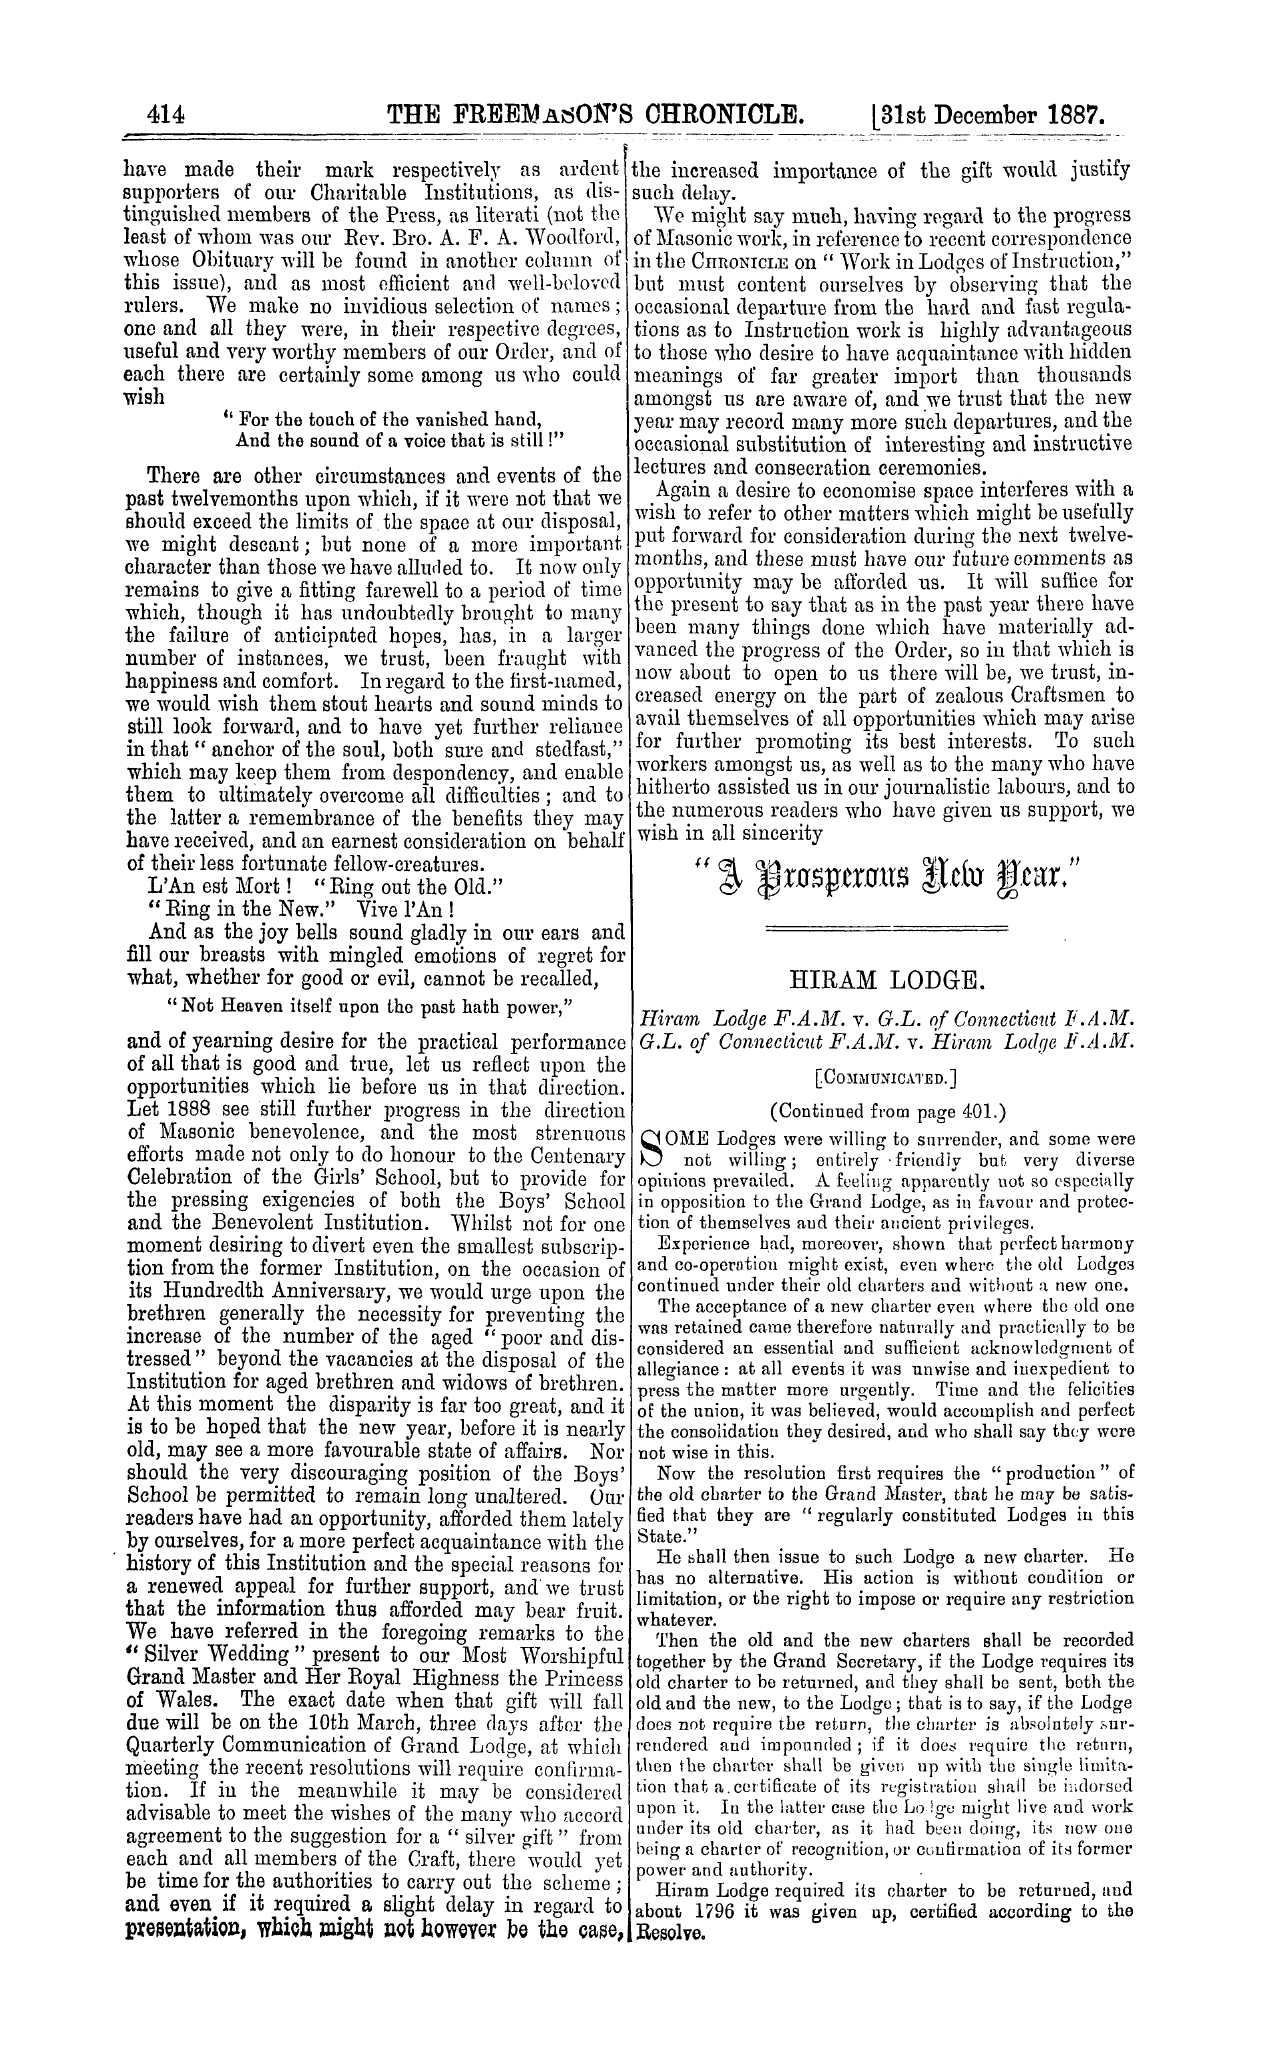 The Freemason's Chronicle: 1887-12-31 - " L'An Est Mort; Vive L'An."